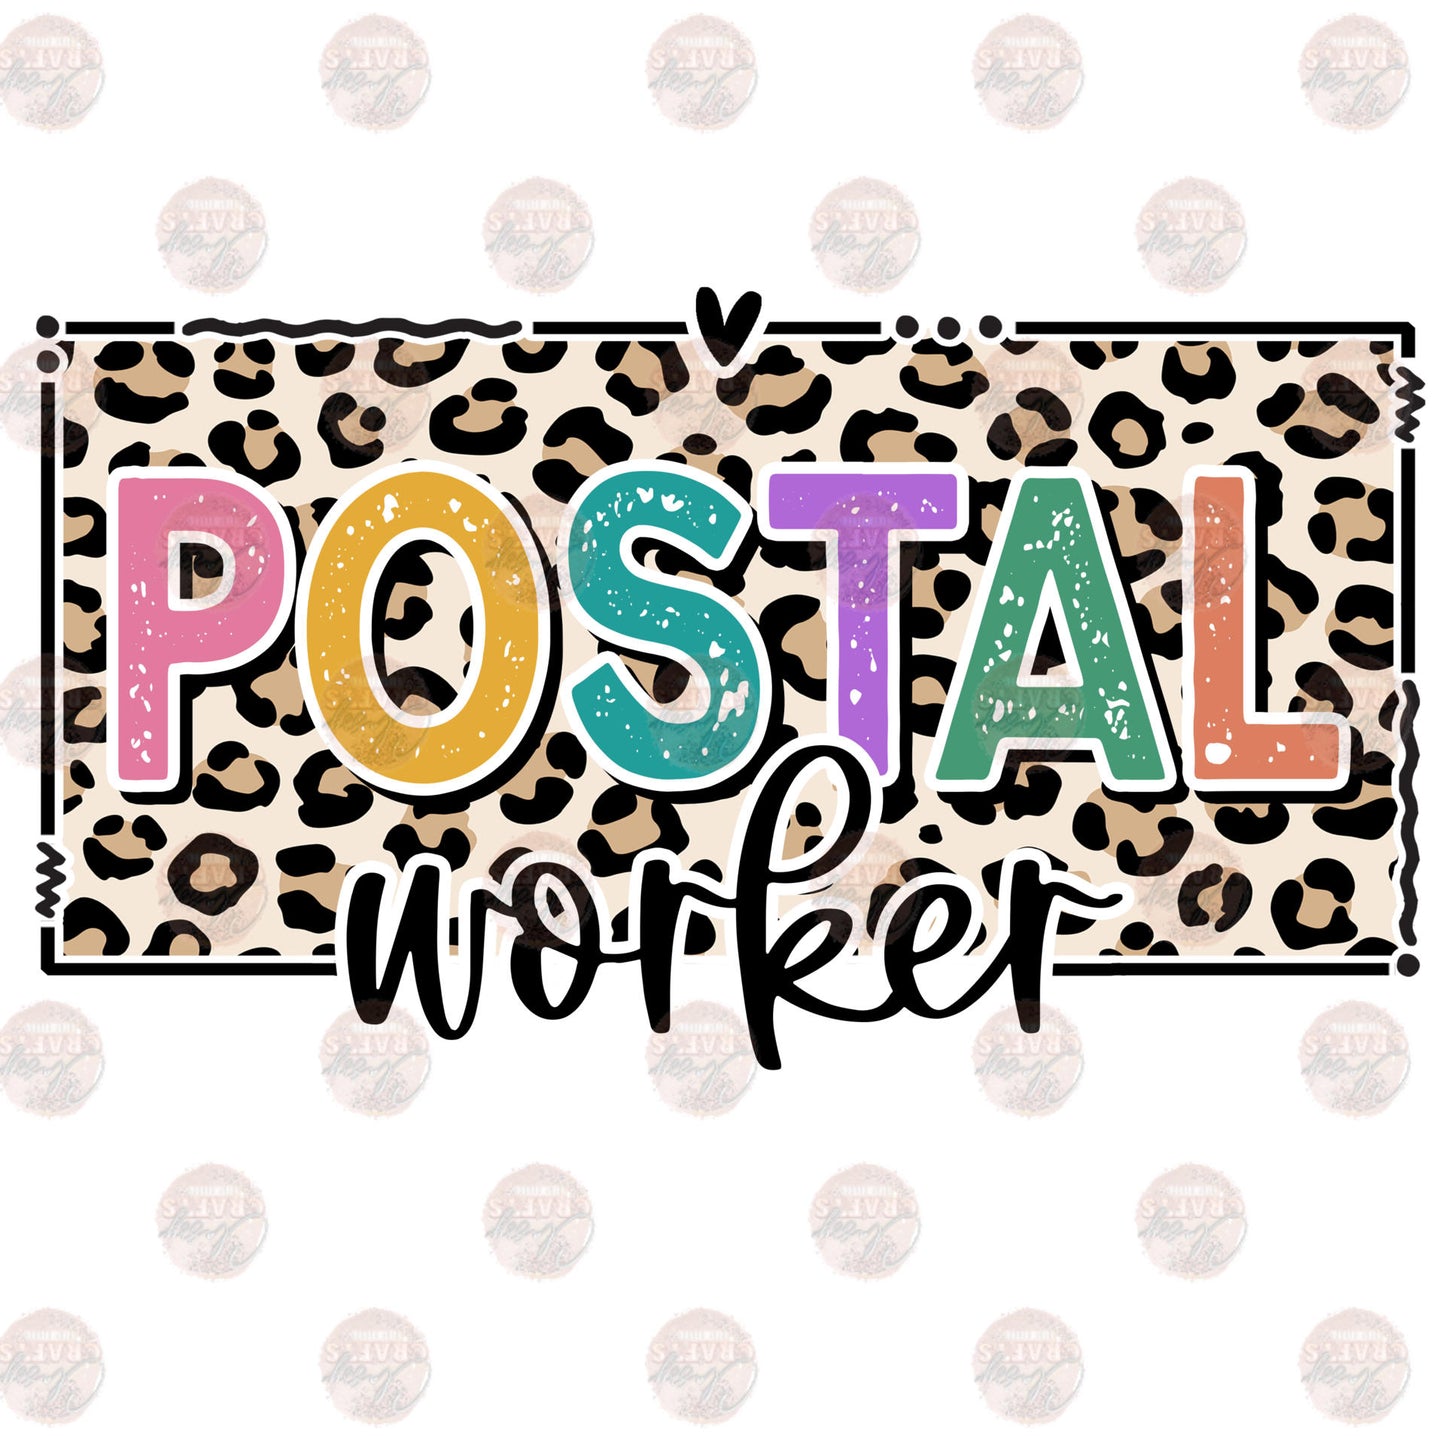 Postal Worker Cheetah Transfer